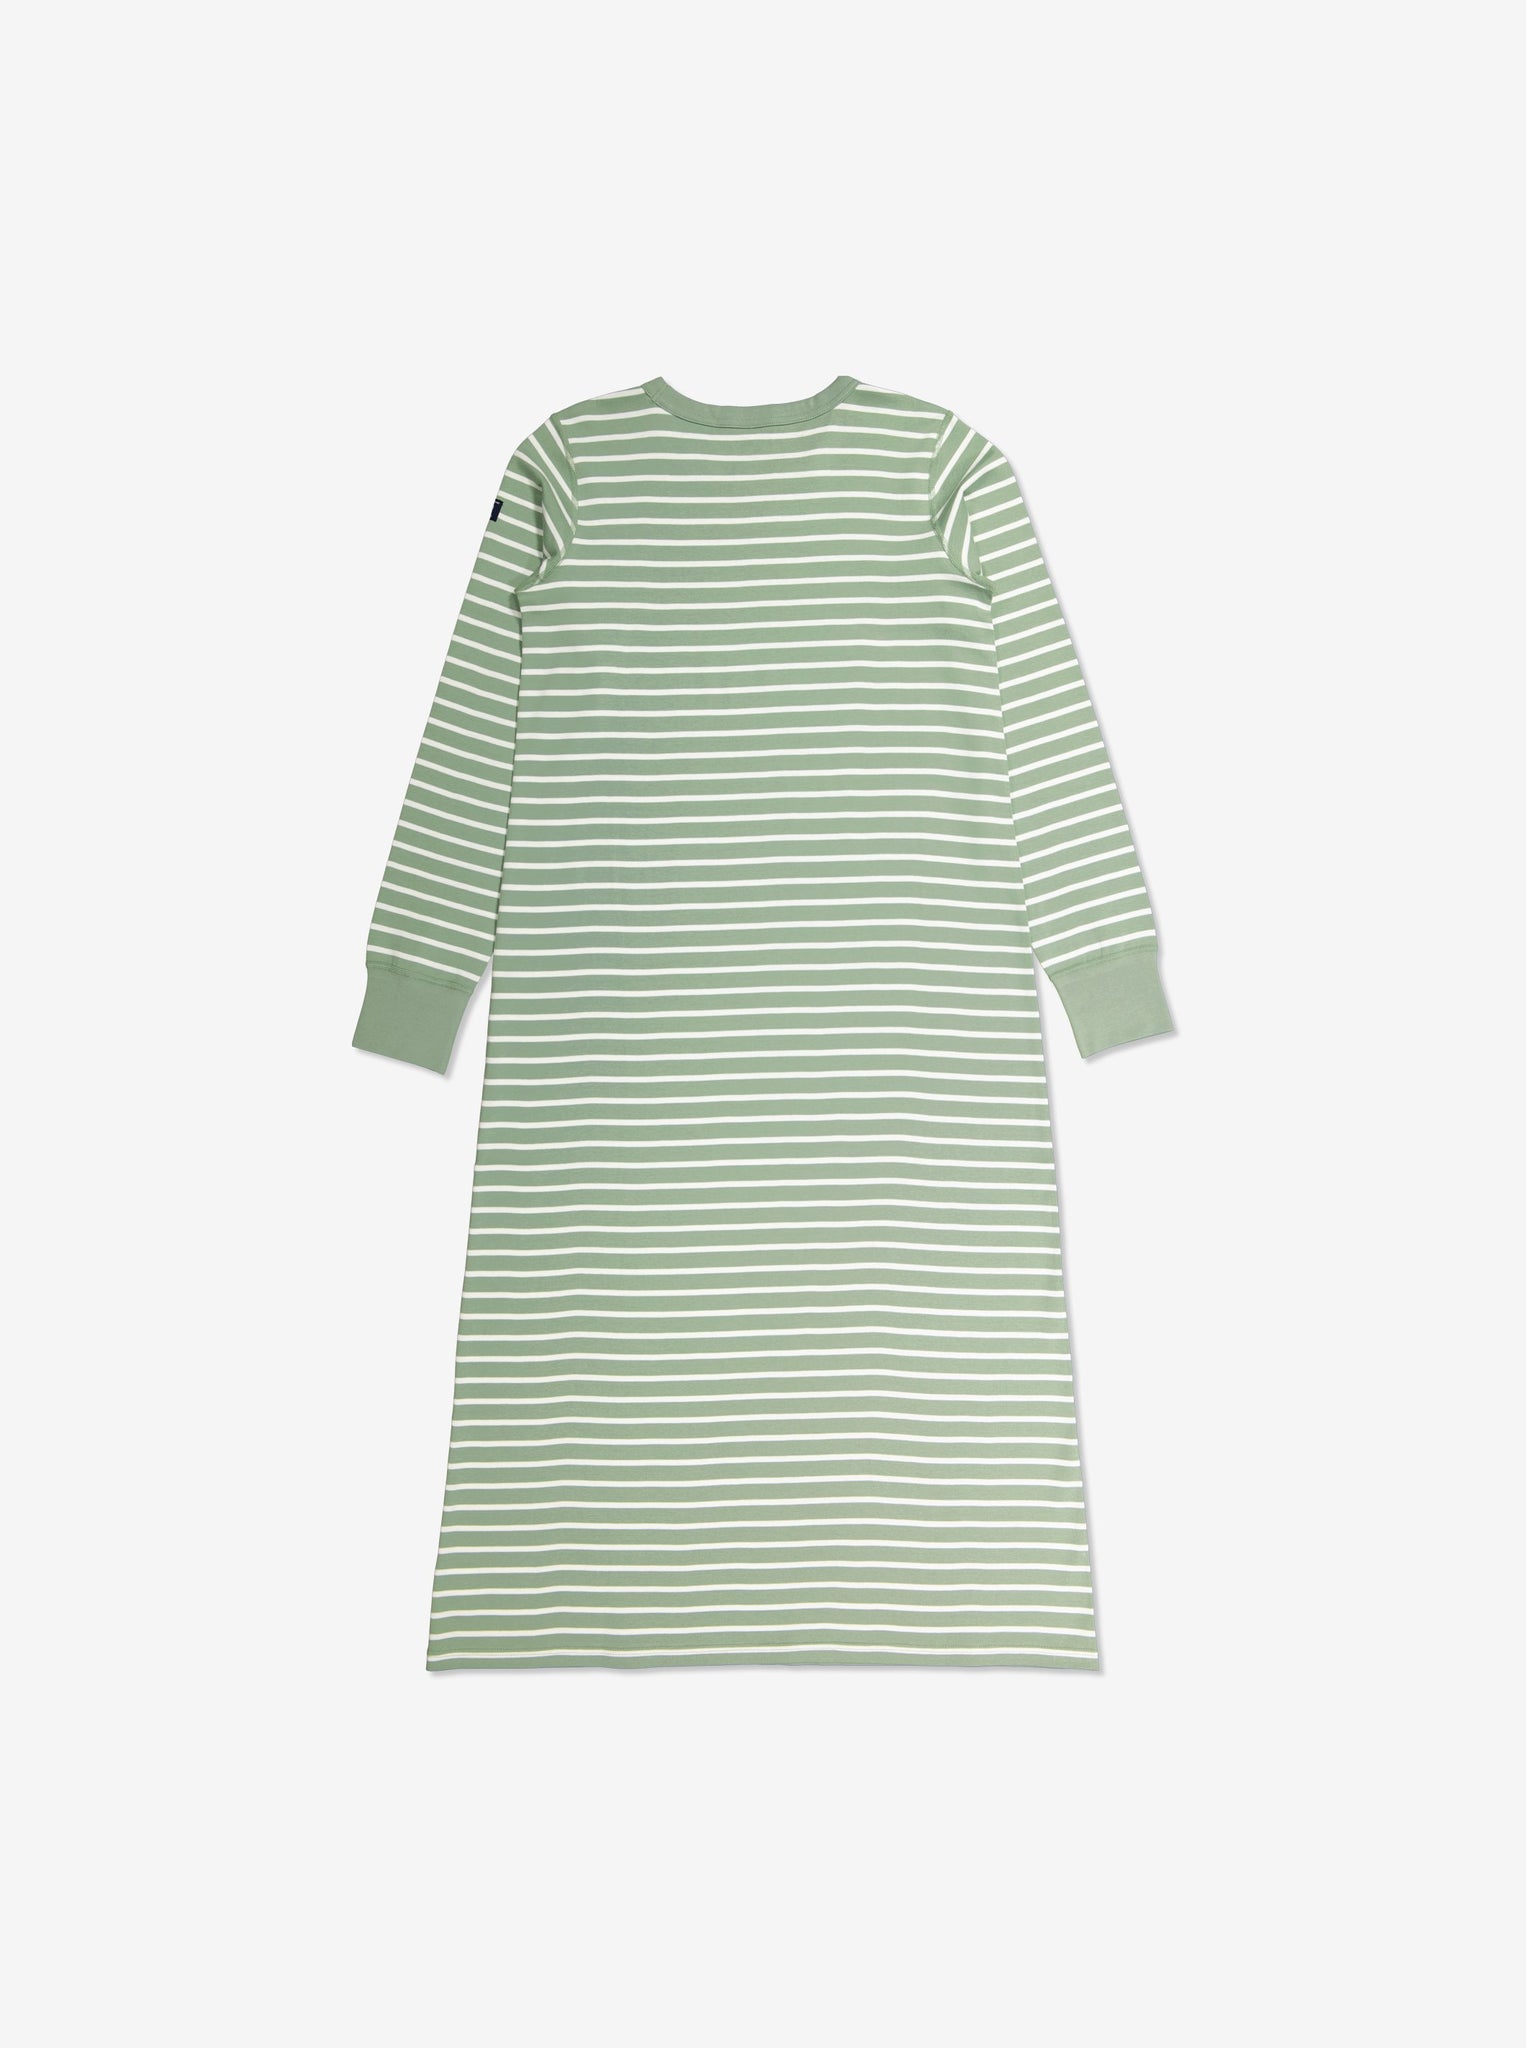  Organic Striped Green Adult Nightdress from Polarn O. Pyret Kidswear. Made with 100% organic cotton.